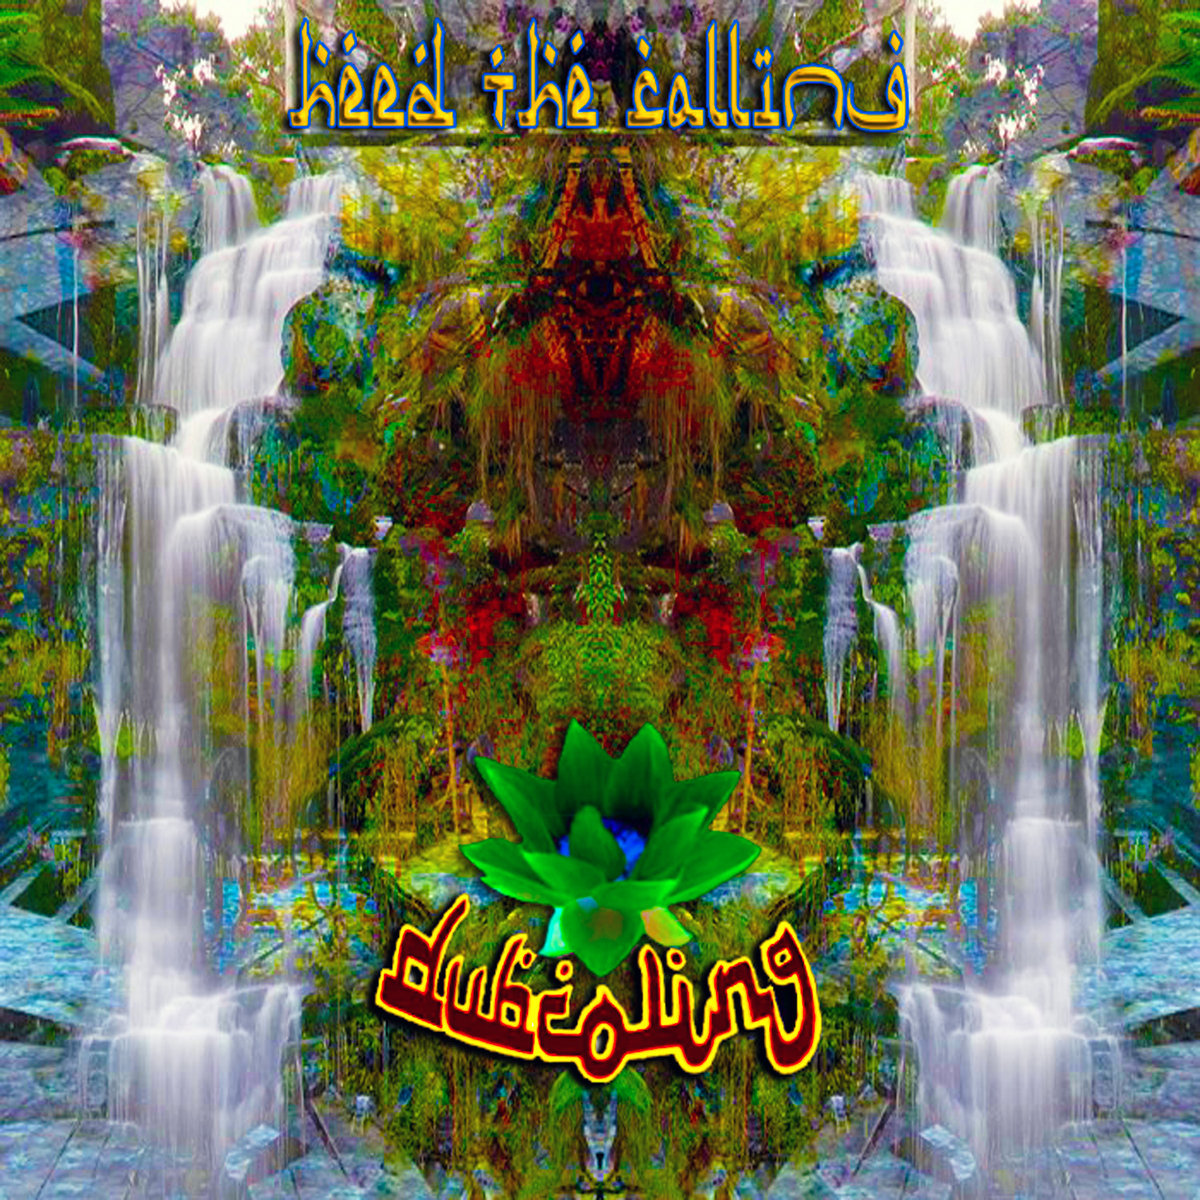 DubCOliNG - Heed The Calling @ 'Heed The Calling' album (bass, electronic)